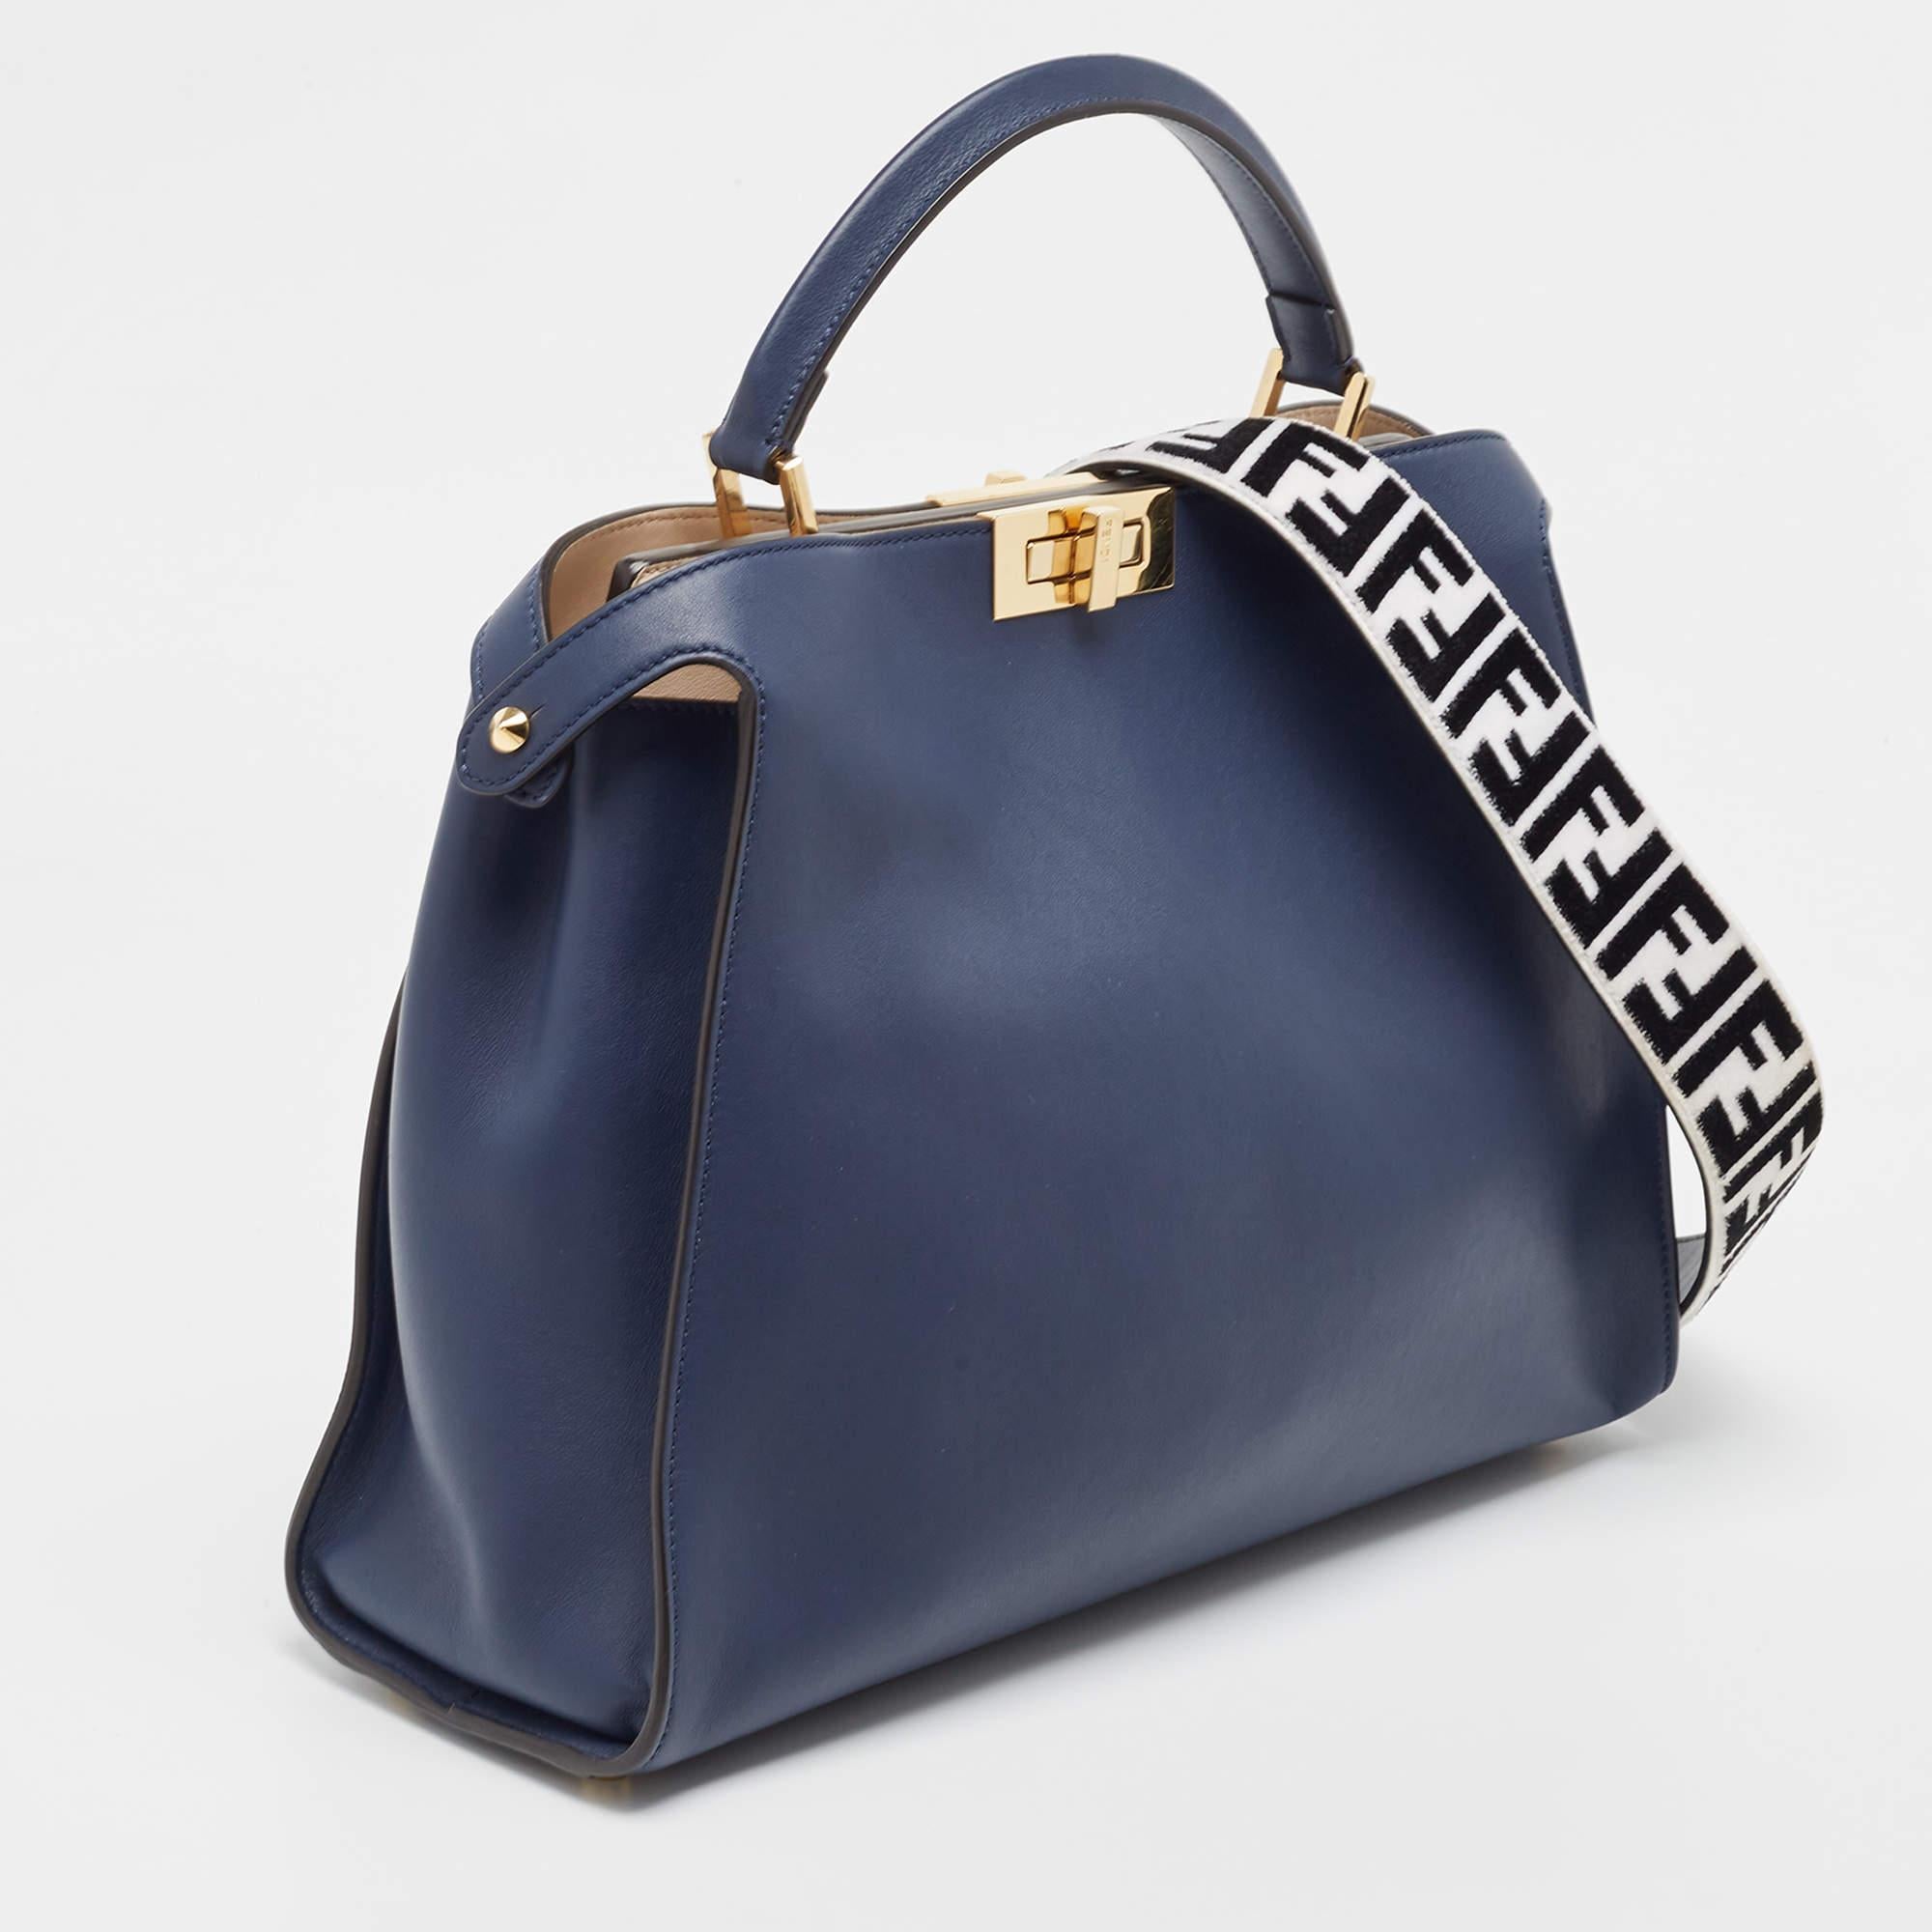 Bleu Fendi - Grand sac en cuir bleu Peekaboo à poignée supérieure en vente